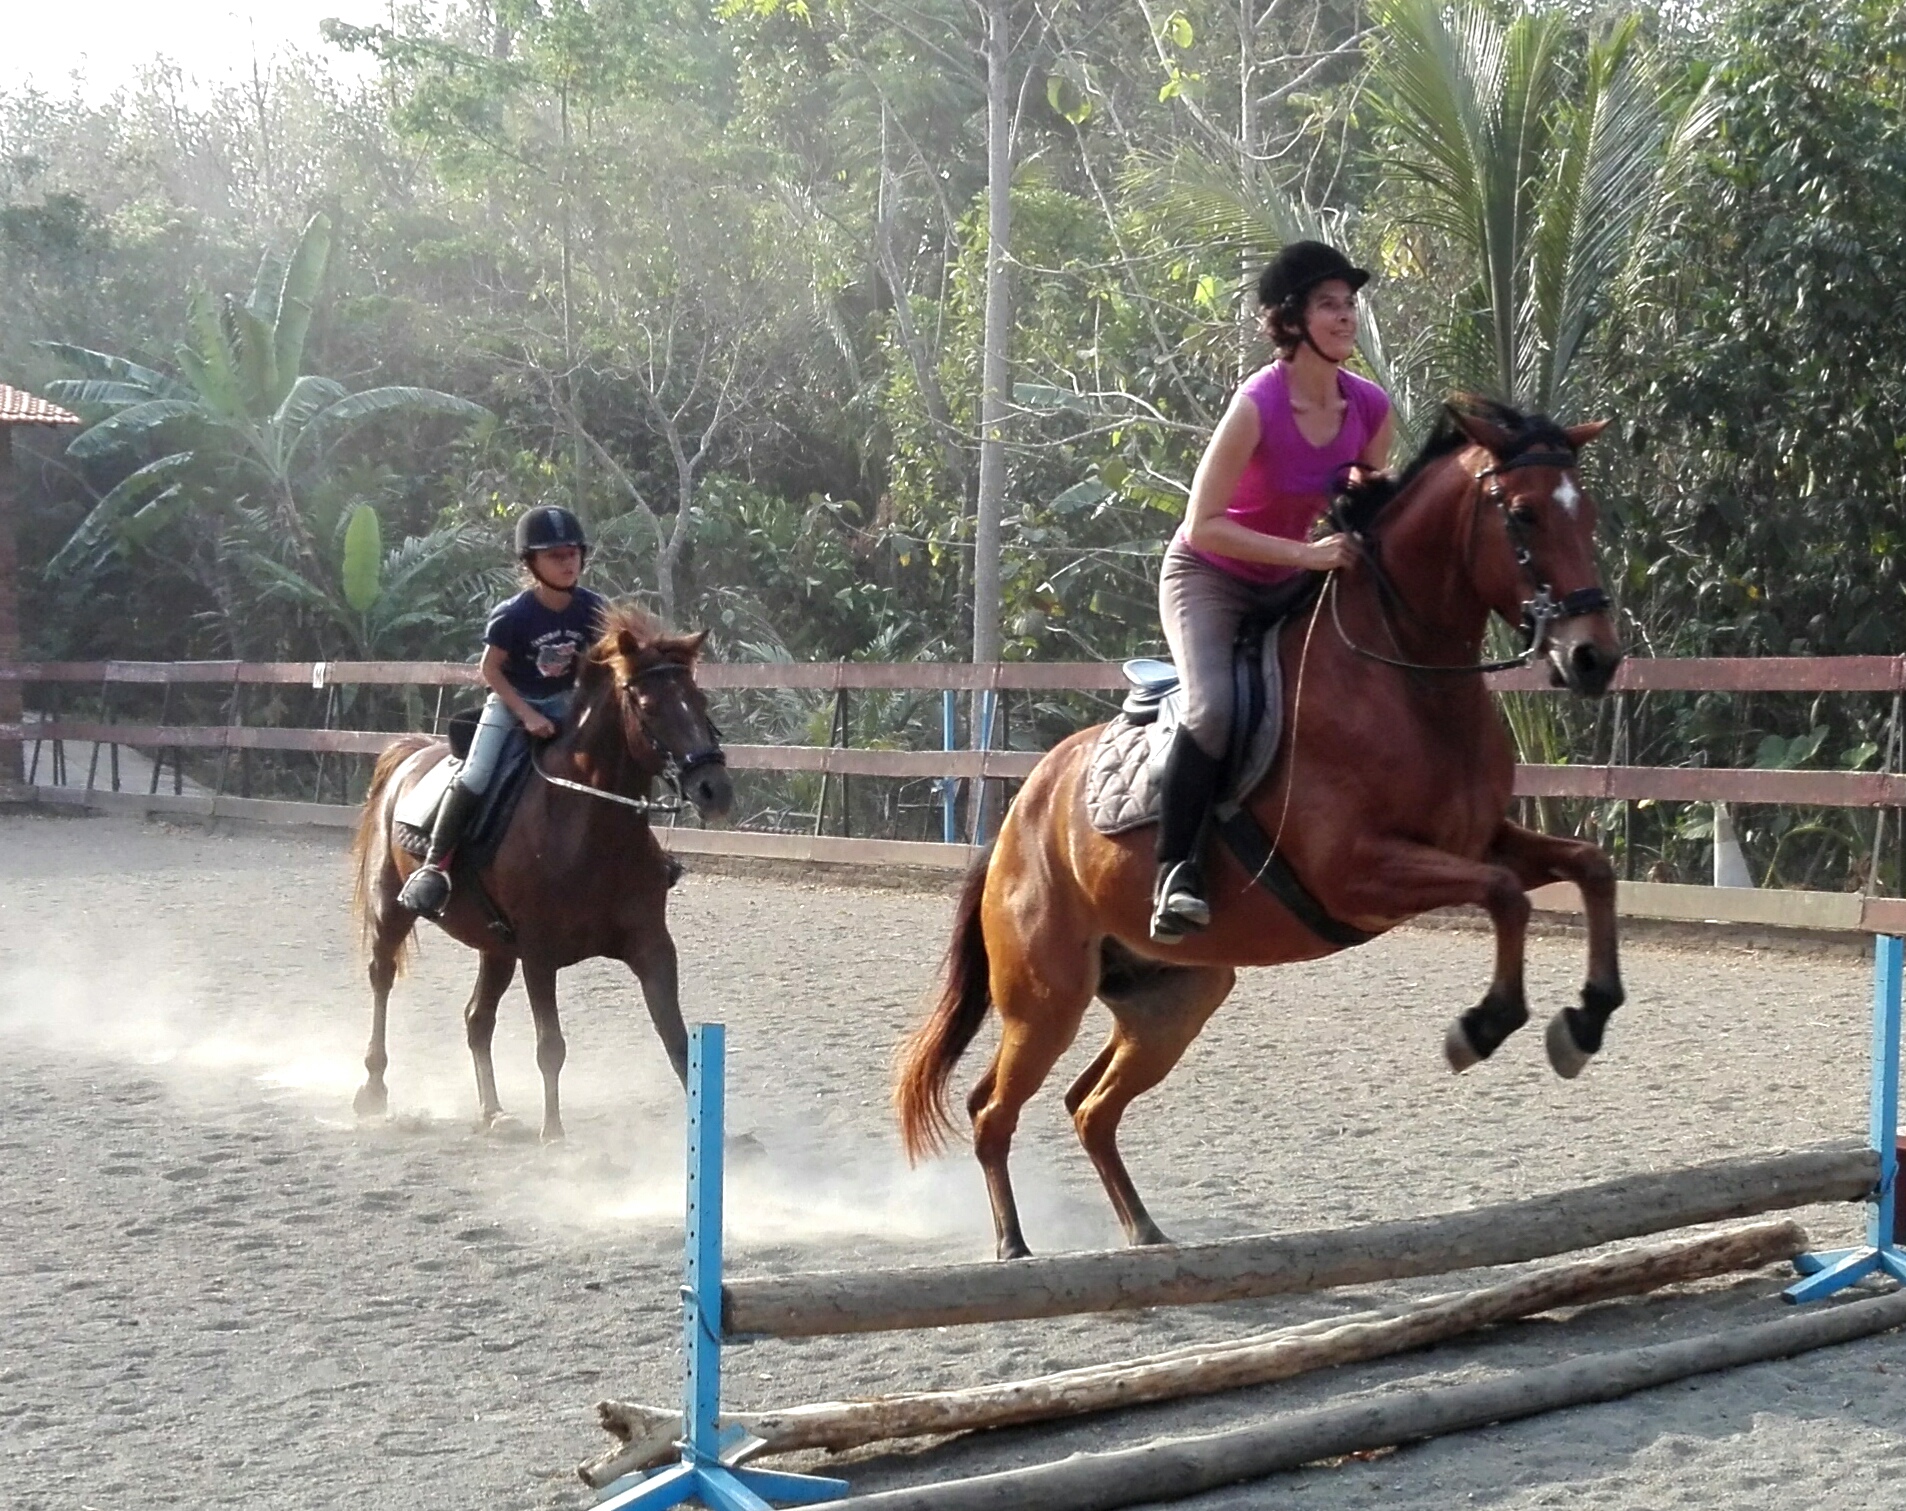 fun riding and jumping!